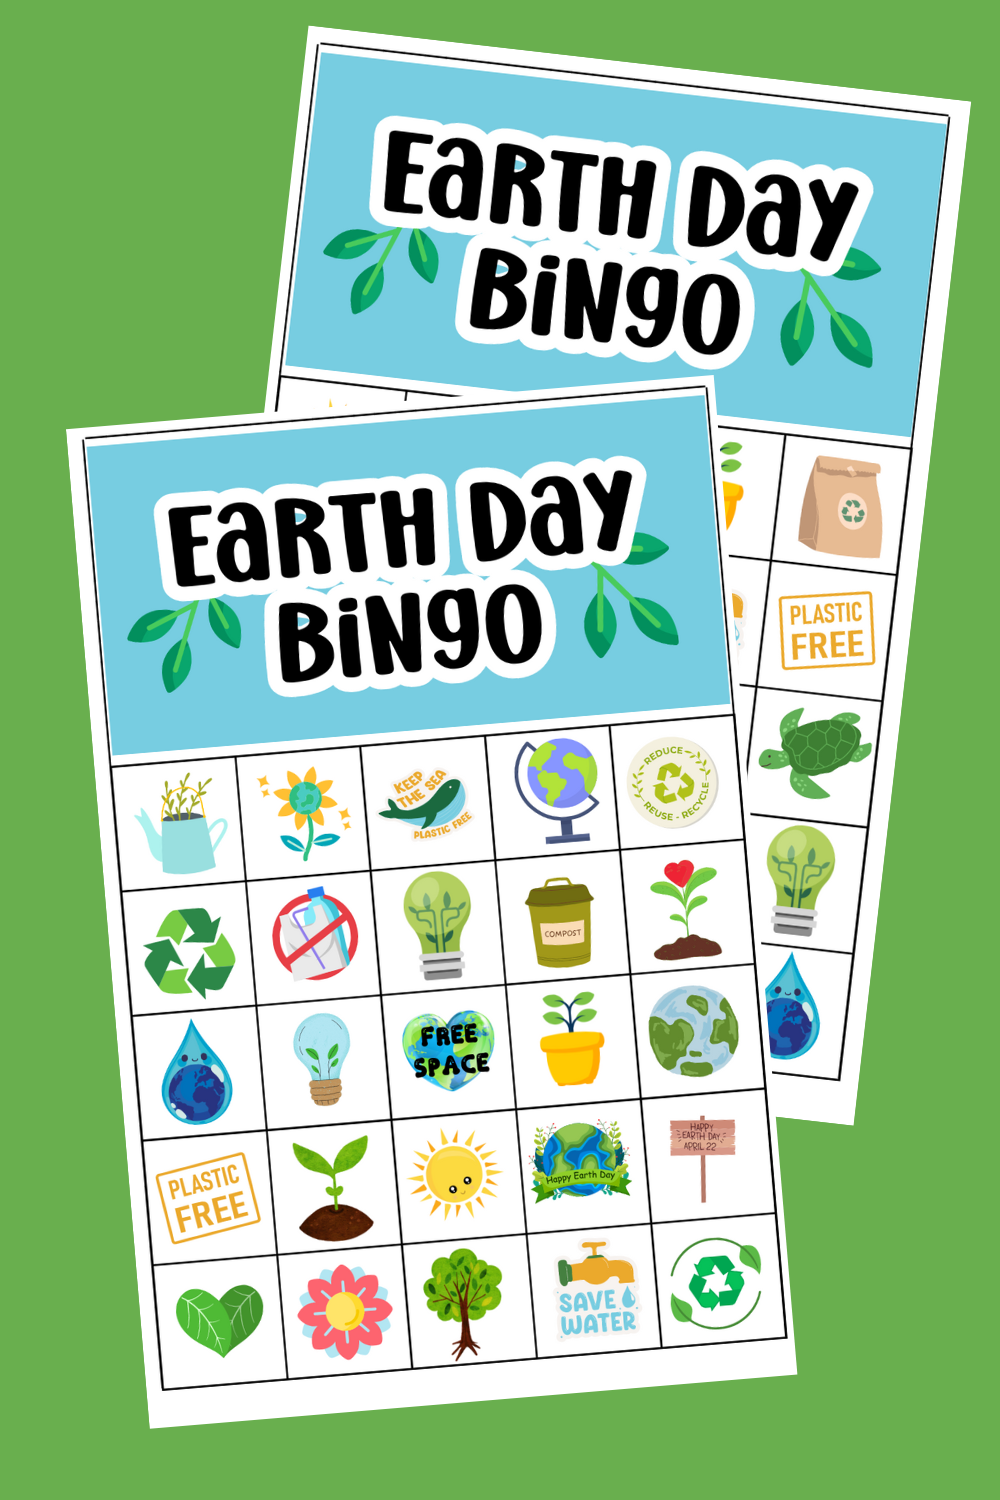 Earth Day Bingo for kids